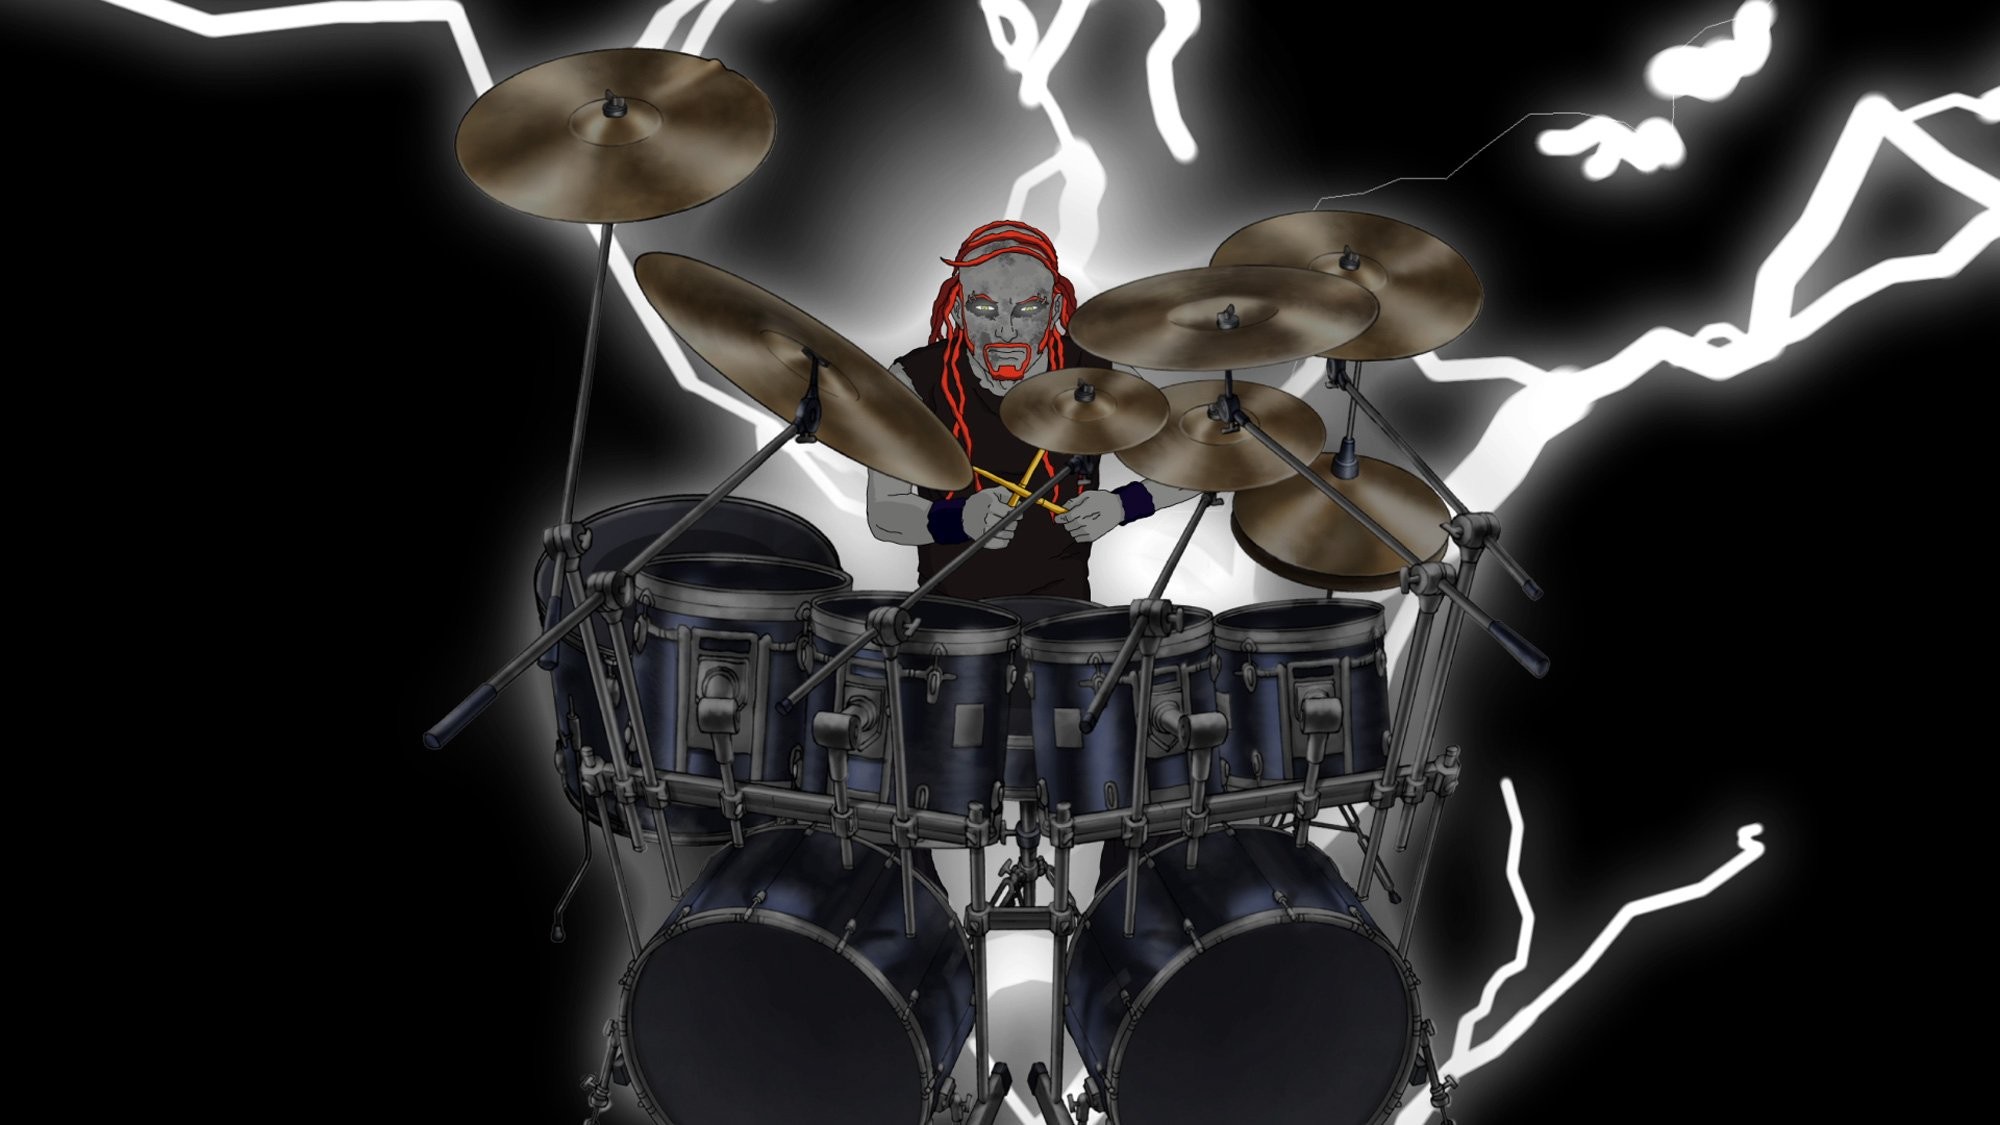 2000x1125 Rock Band Drummer Cartoon | ... music cartoons hard rock band groups  metalocalypse drums